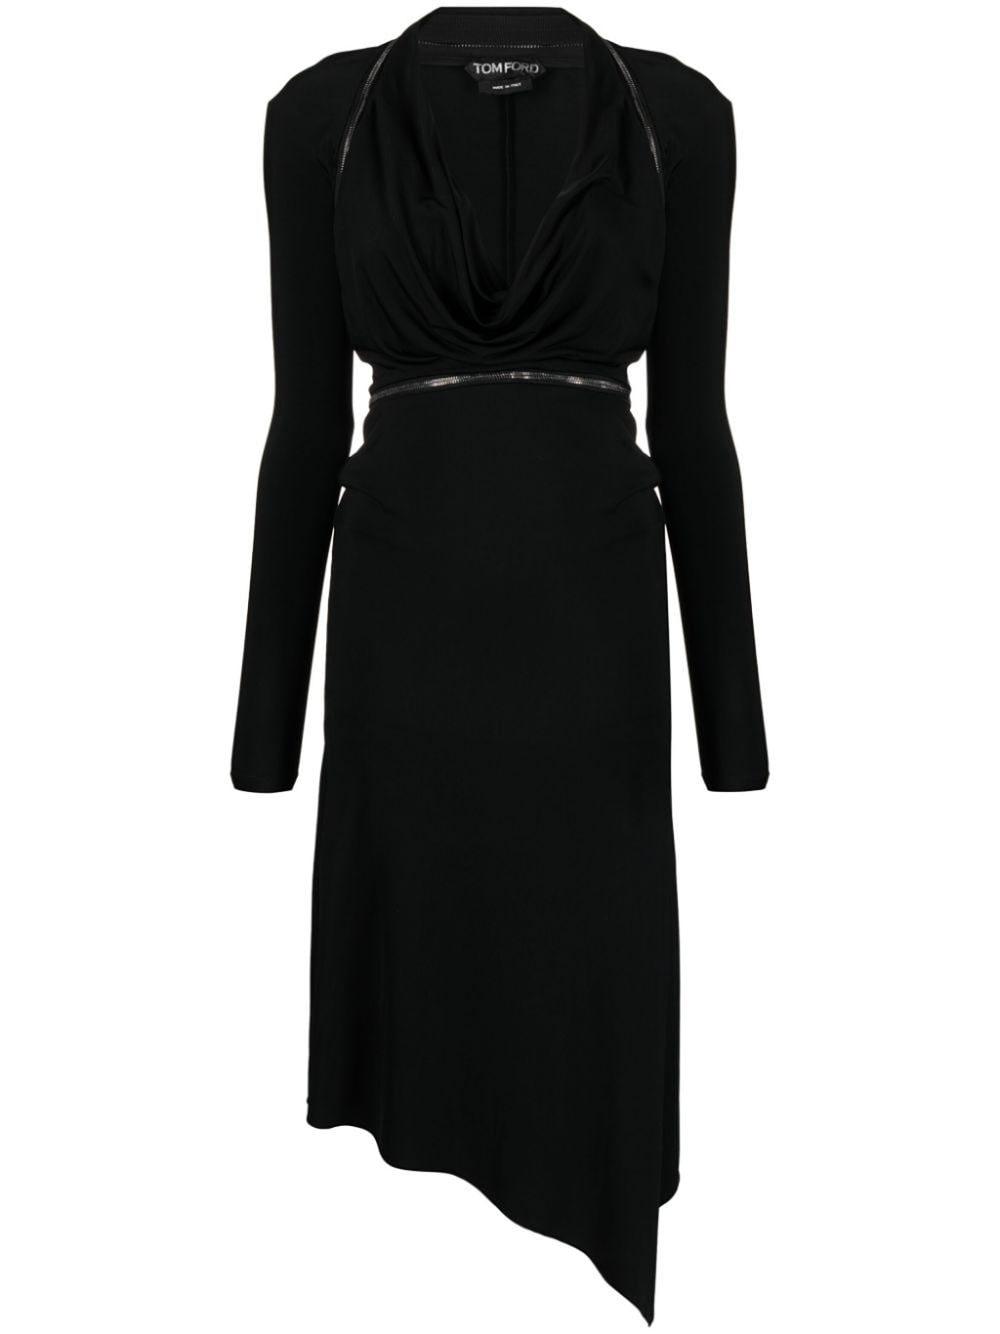 Tom Ford Asymmetric Convertible Midi Dress in Black | Lyst